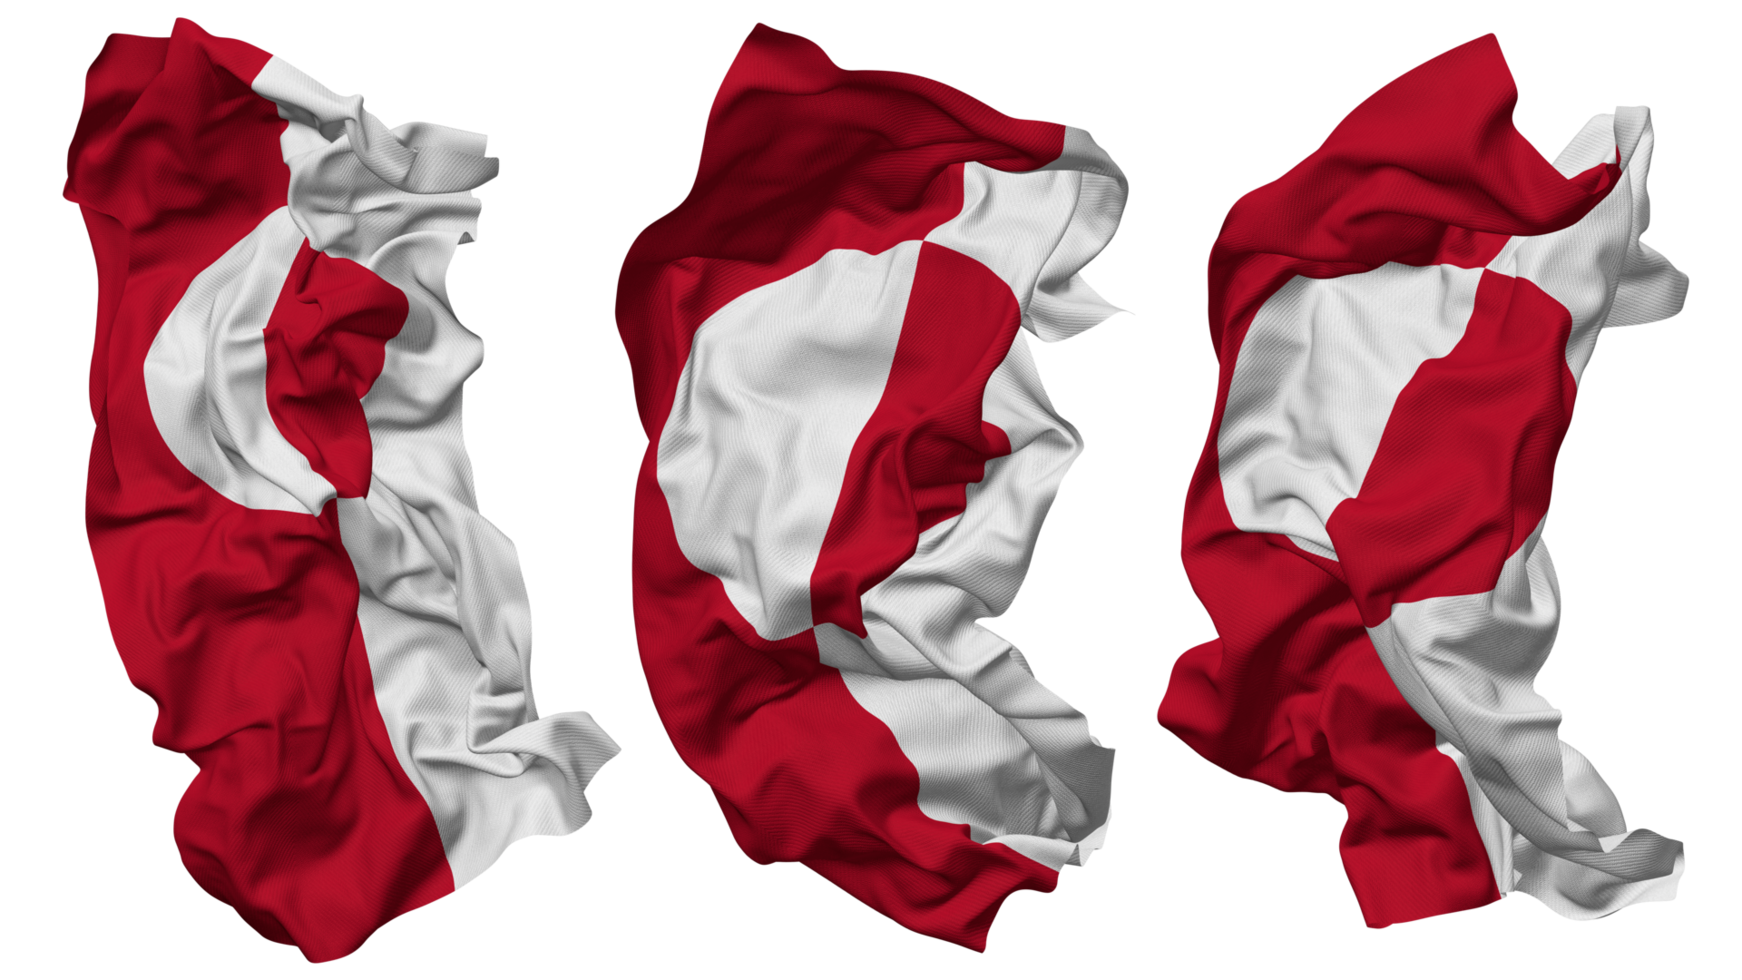 Groenlandia bandera olas aislado en diferente estilos con bache textura, 3d representación png